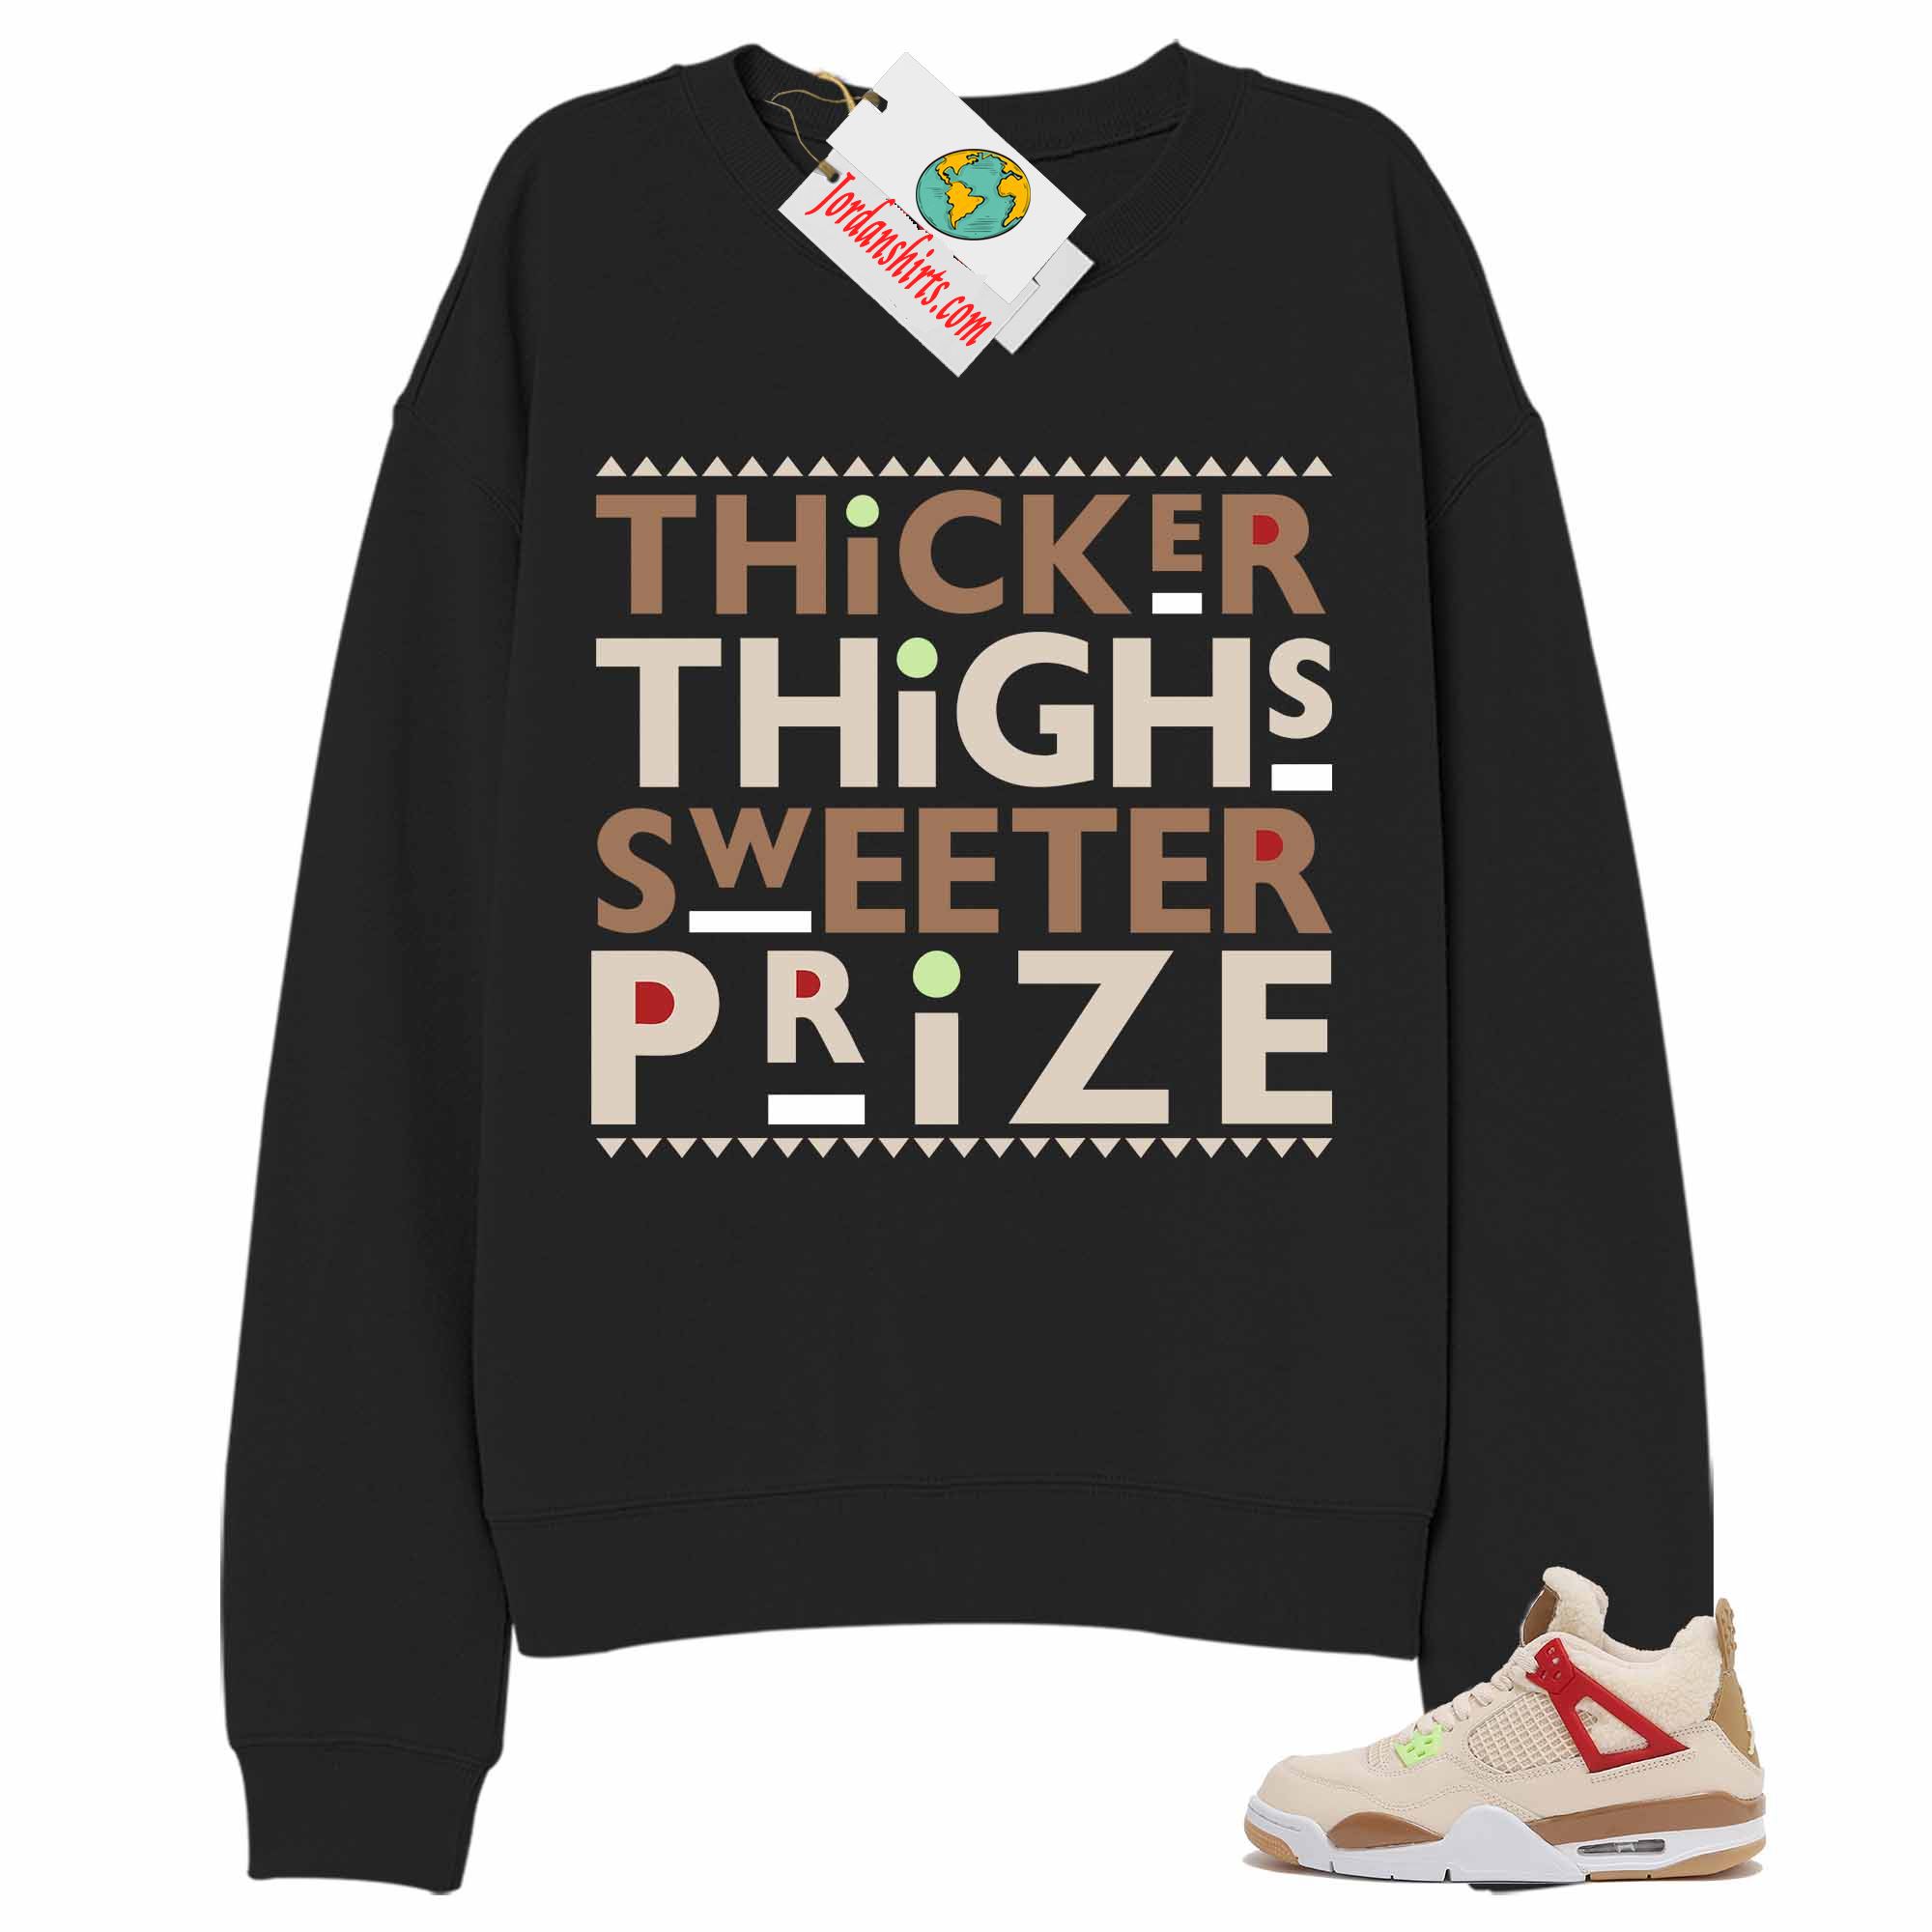 Jordan 4 Sweatshirt, Thicker Thighs Sweeter Prize Black Sweatshirt Air Jordan 4 Wild Things 4s Size Up To 5xl